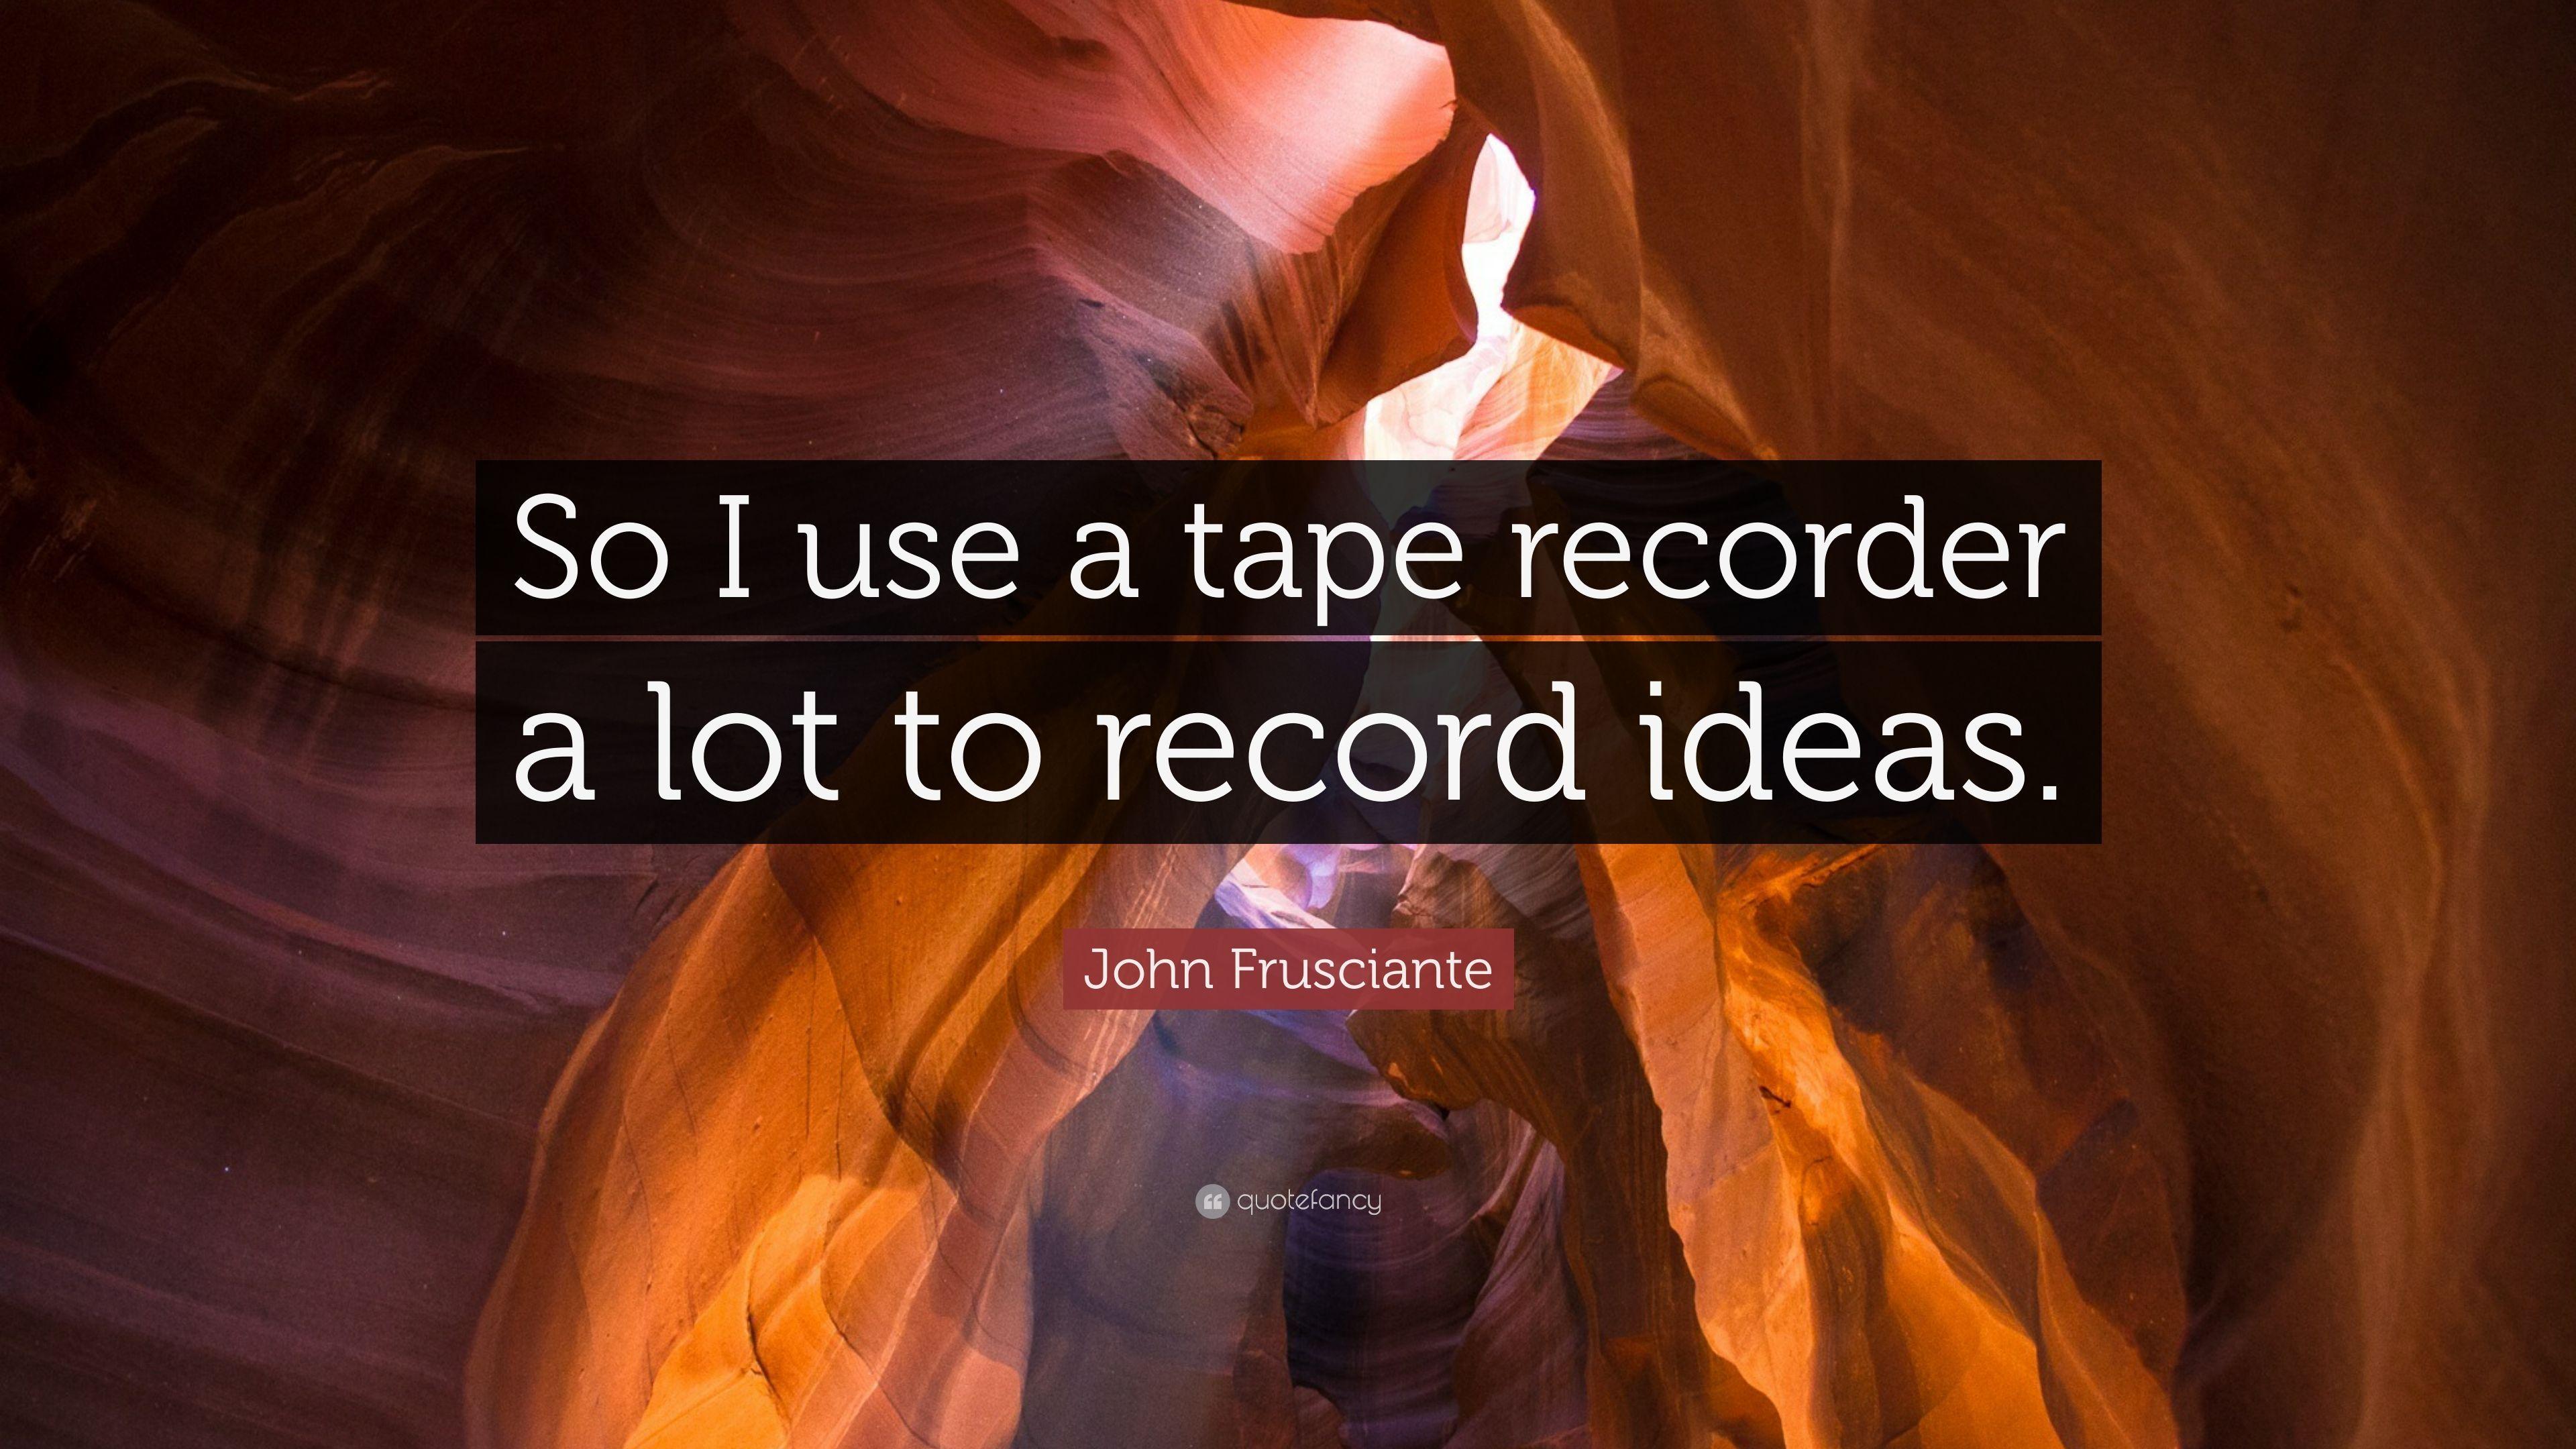 John Frusciante Quote: “So I use a tape recorder a lot to record